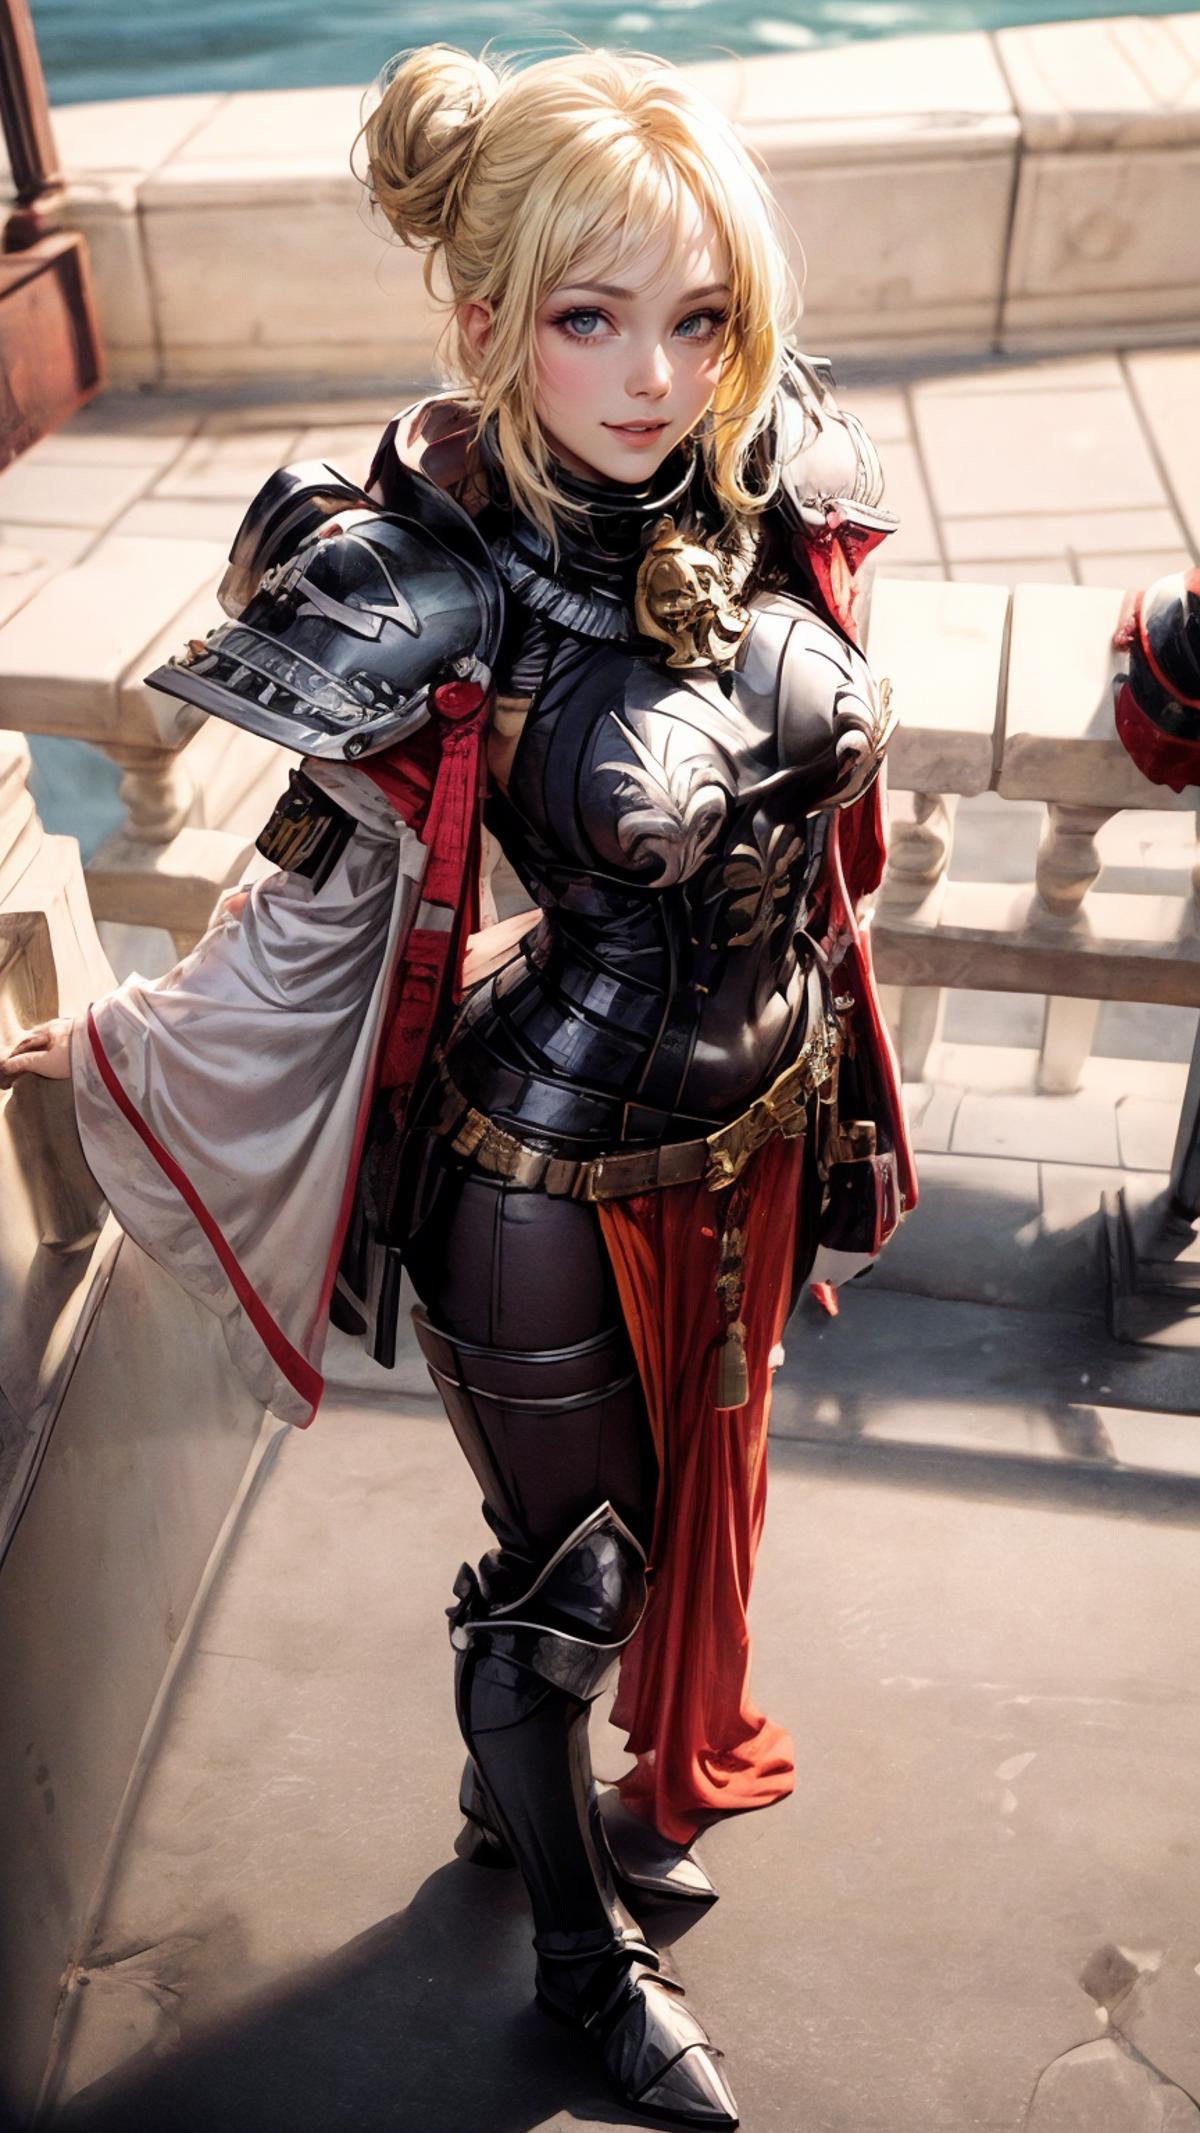 Warhammer 40K Adepta Sororitas Sister of Battle armor - by EDG image by tonyhs